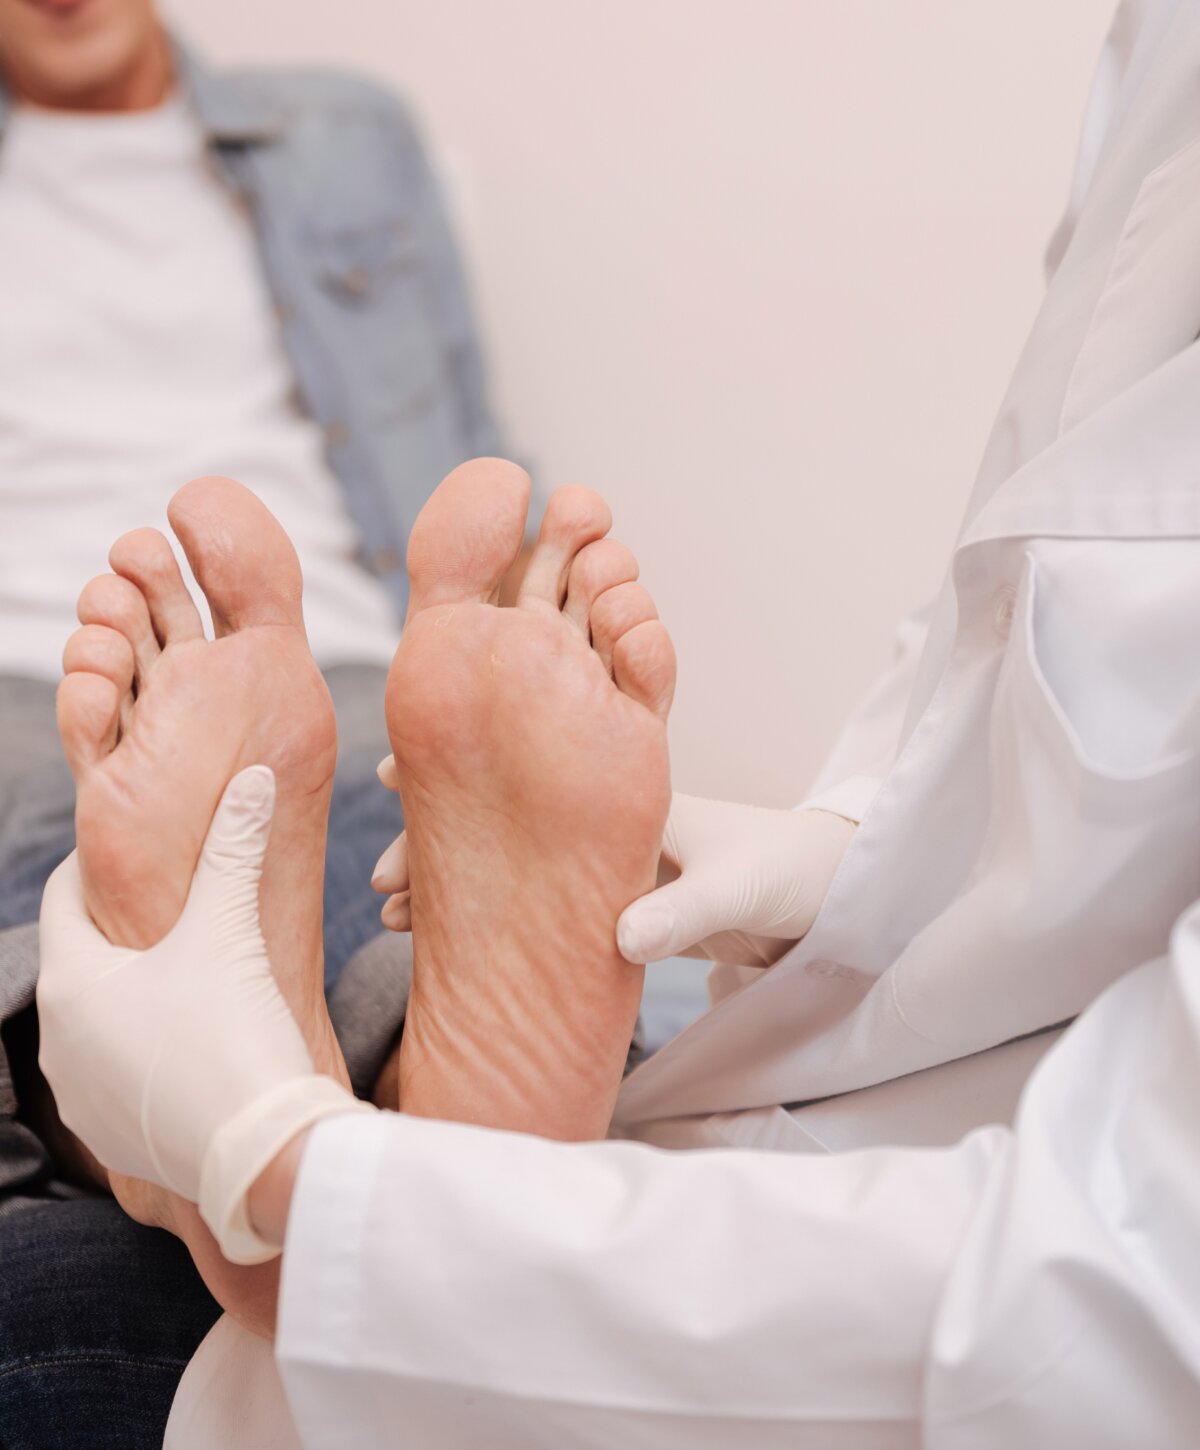 Ann Arbor diabetic foot care model receiving treatment